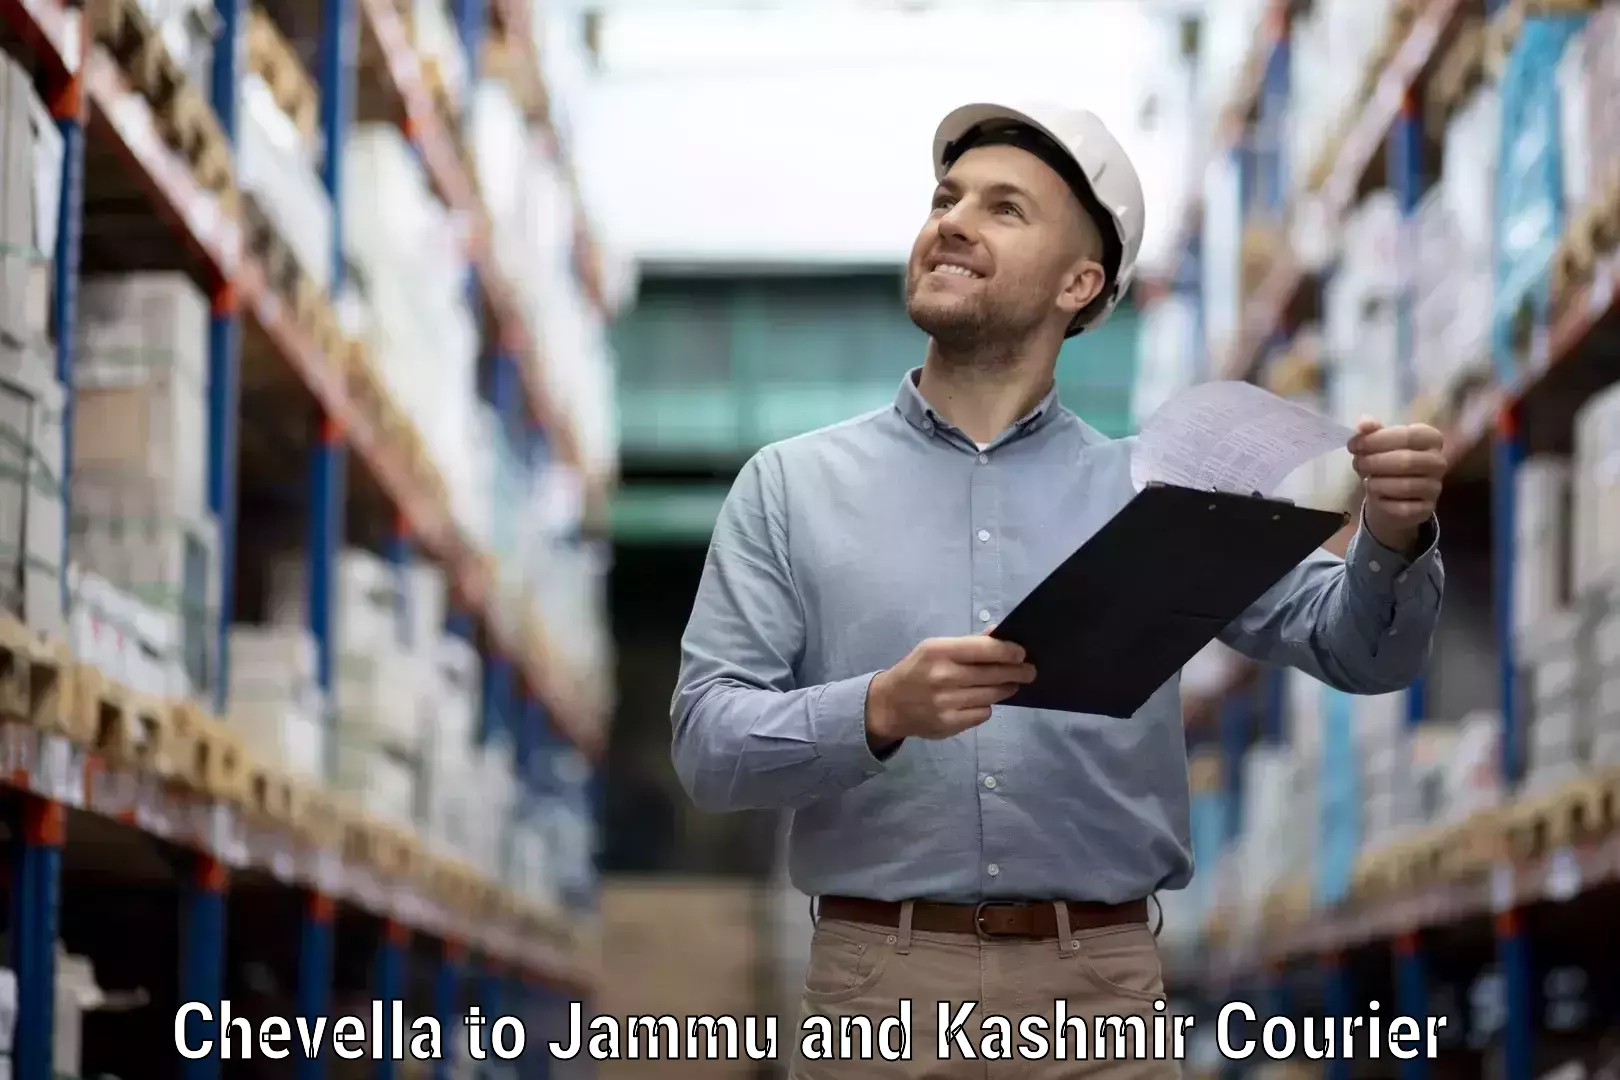 Courier service comparison Chevella to Jammu and Kashmir